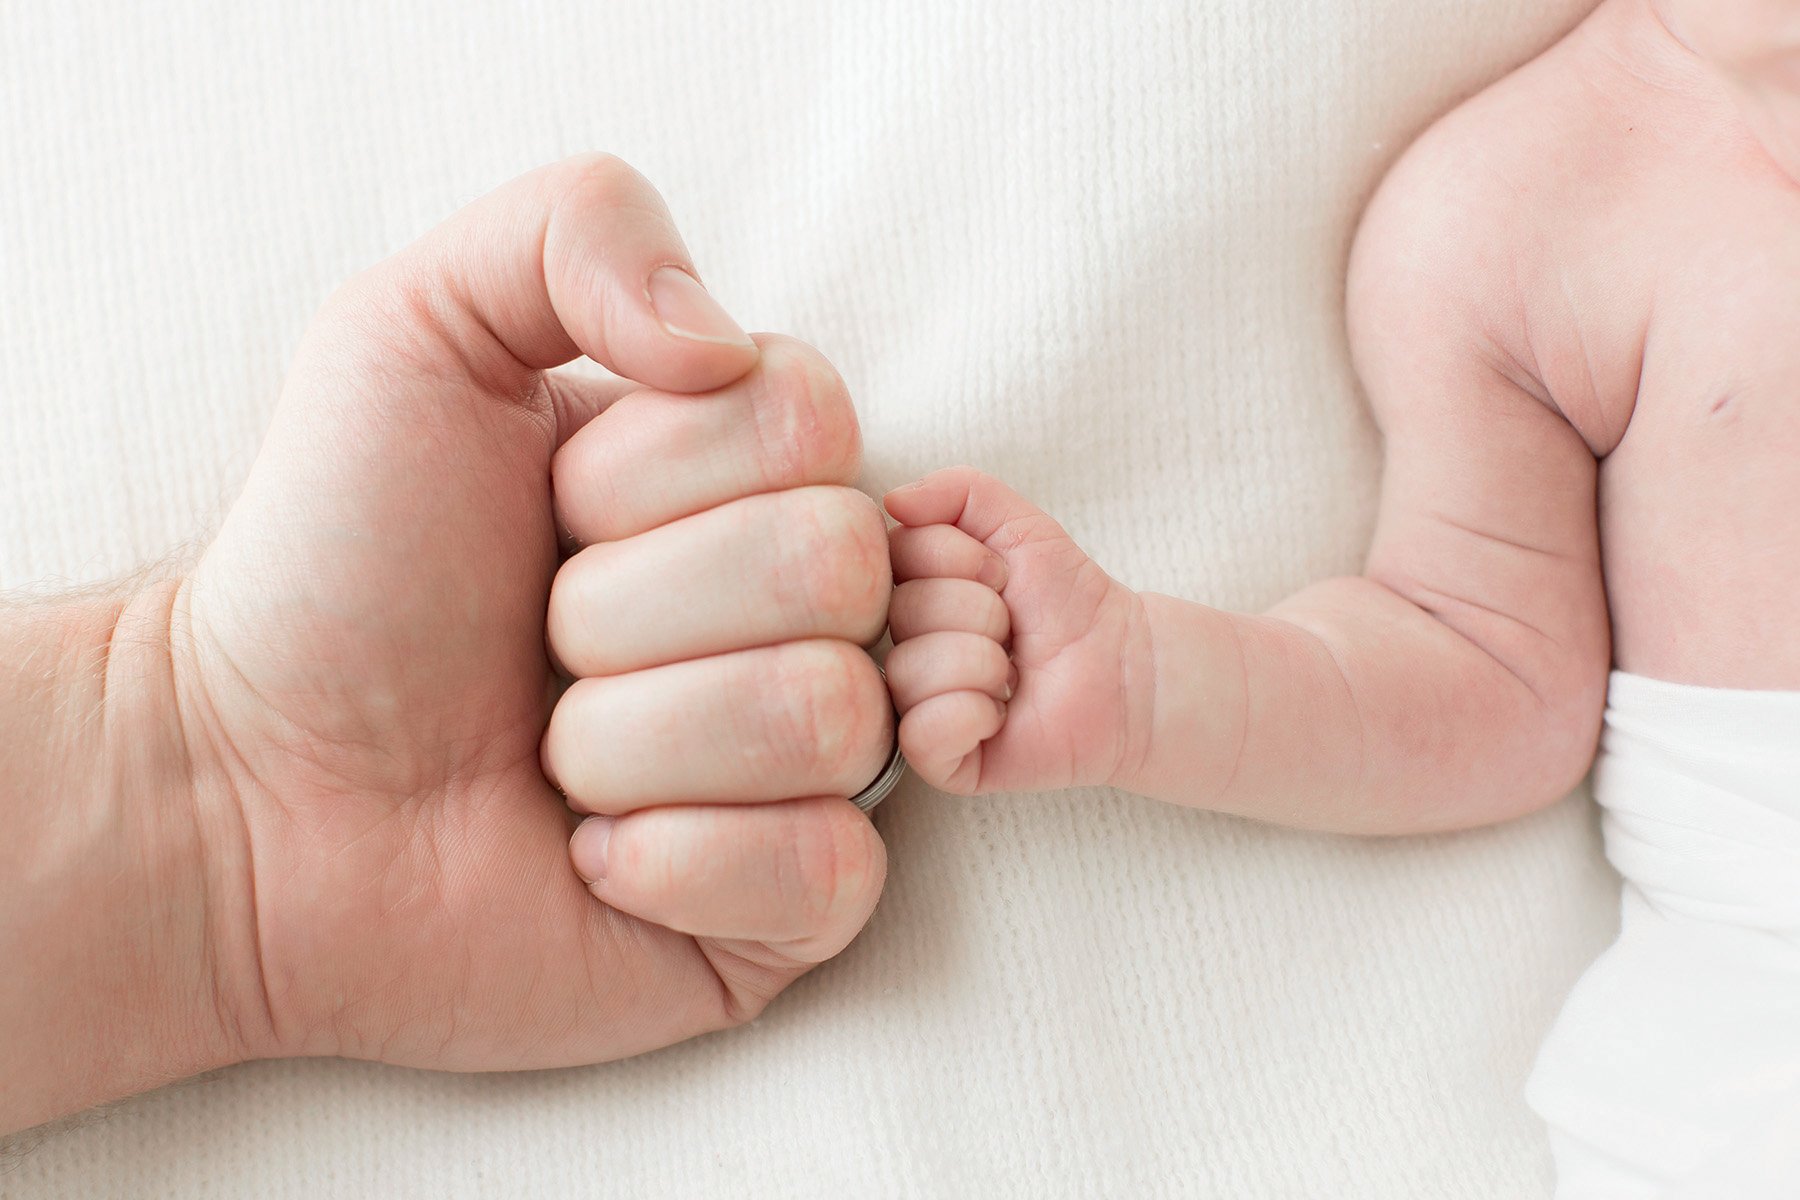 dad fist bumps newborn baby boy